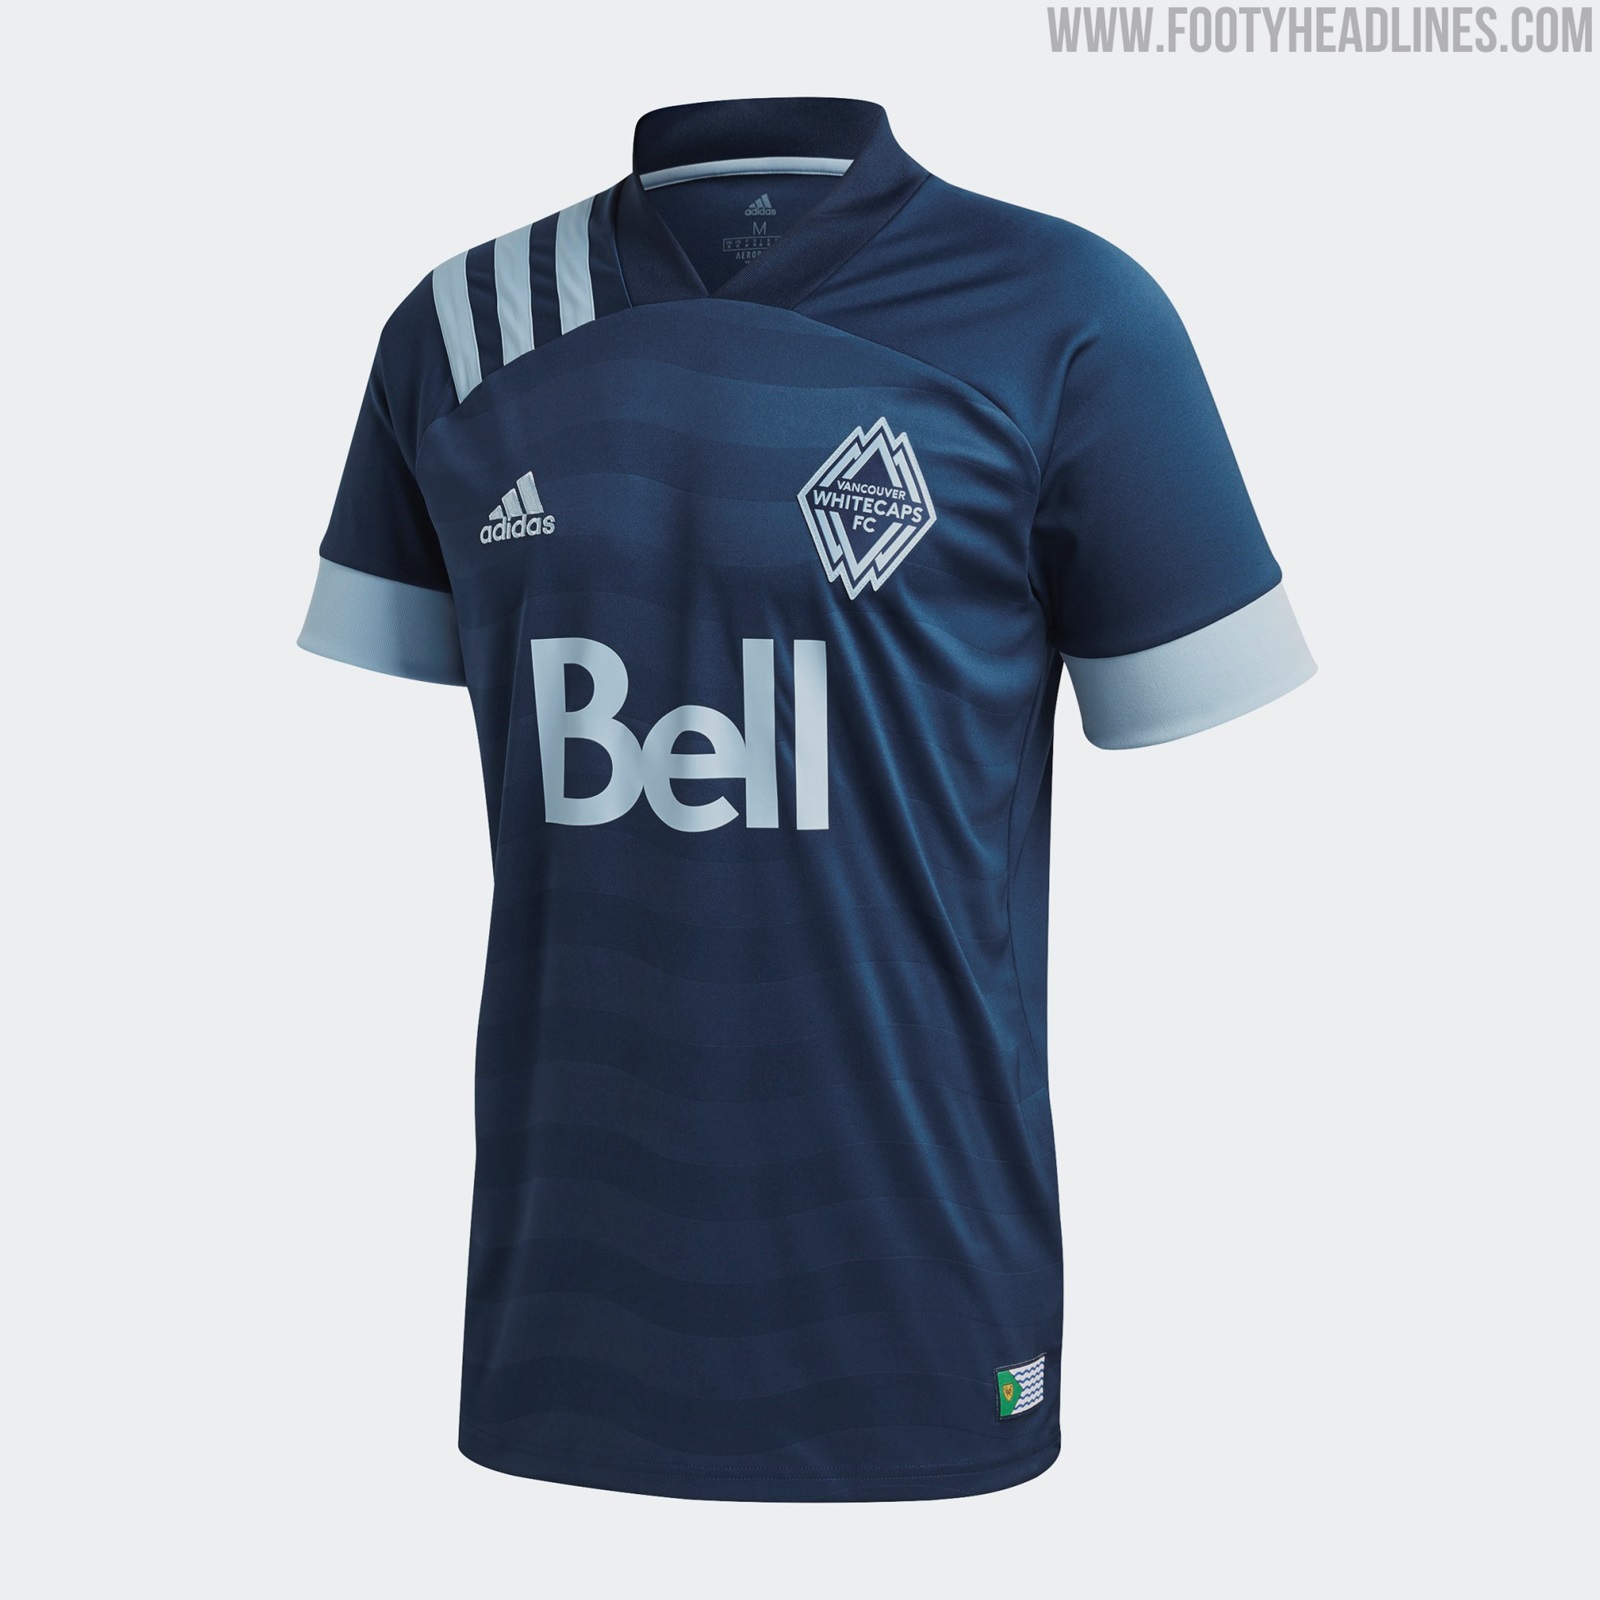 Vancouver Whitecaps unveil new jerseys ahead of 2021 season (PHOTOS)